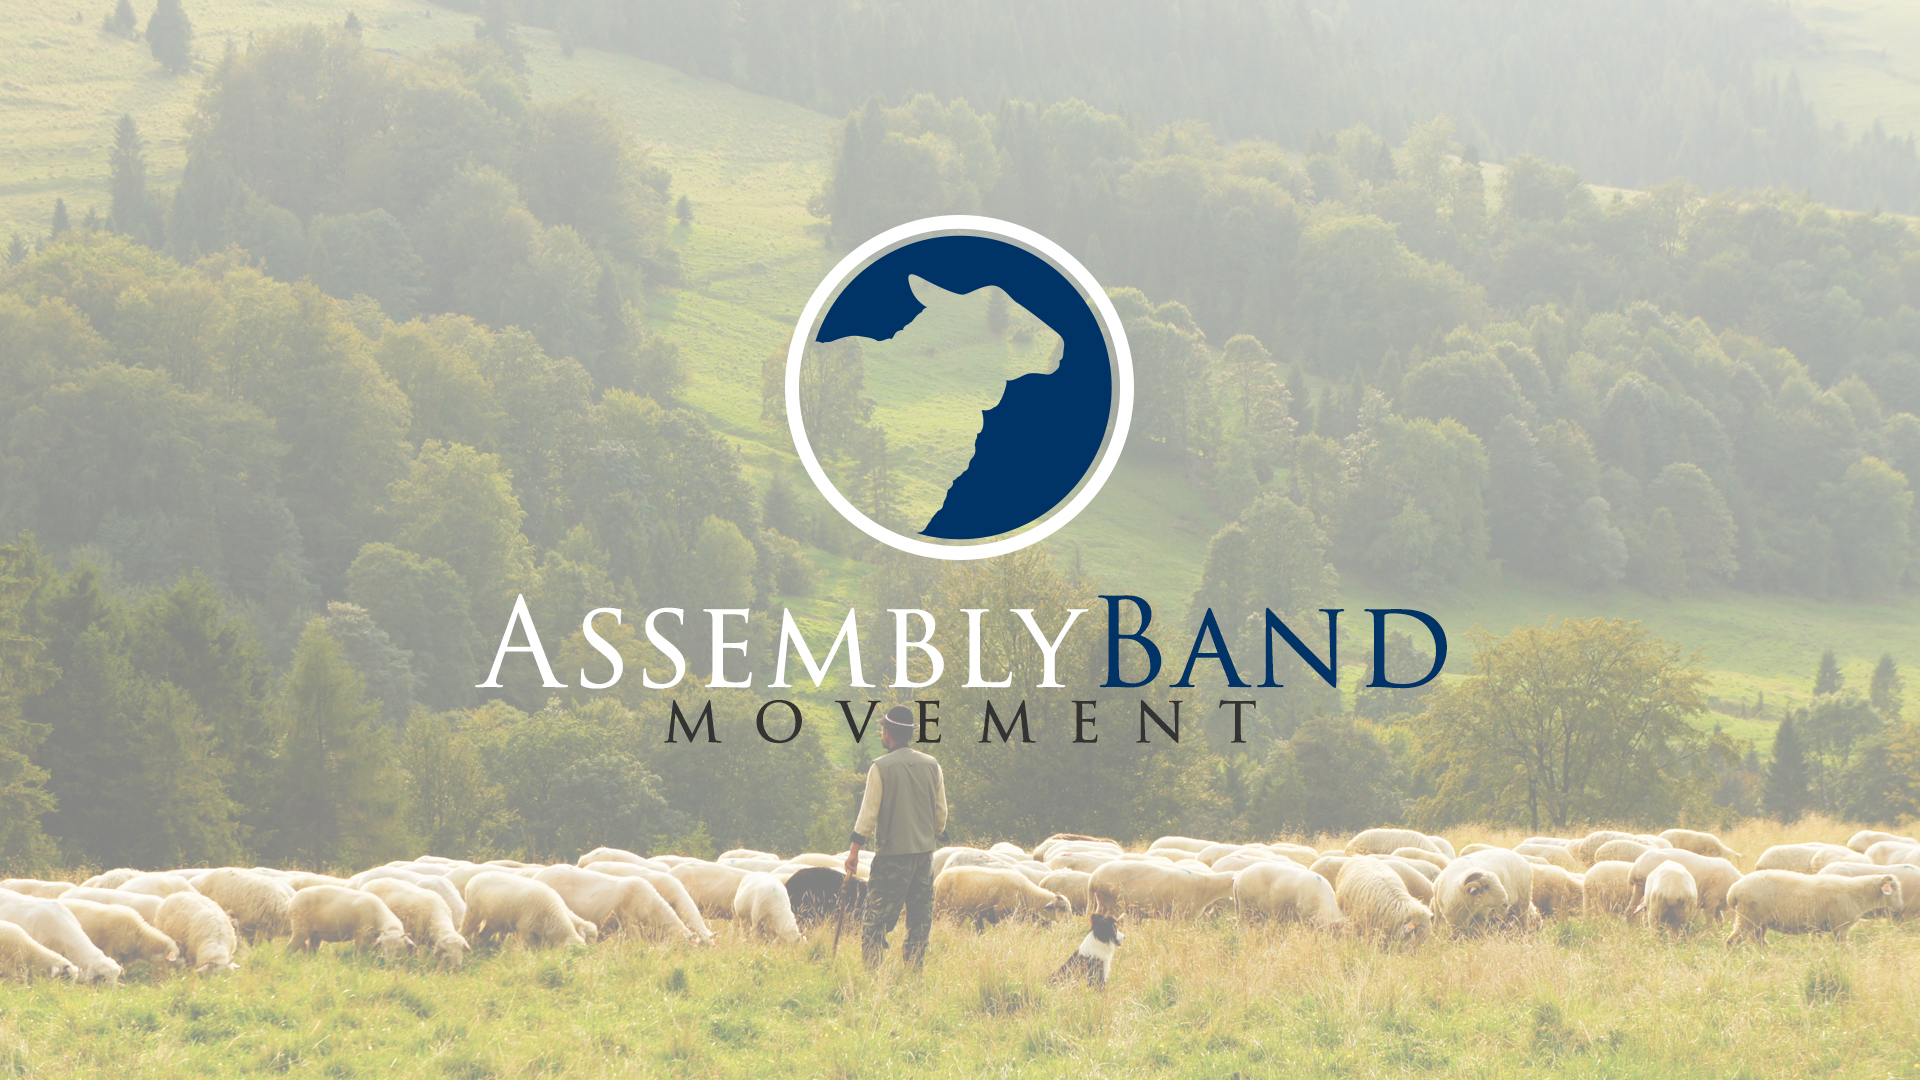 Assembly Band Movement